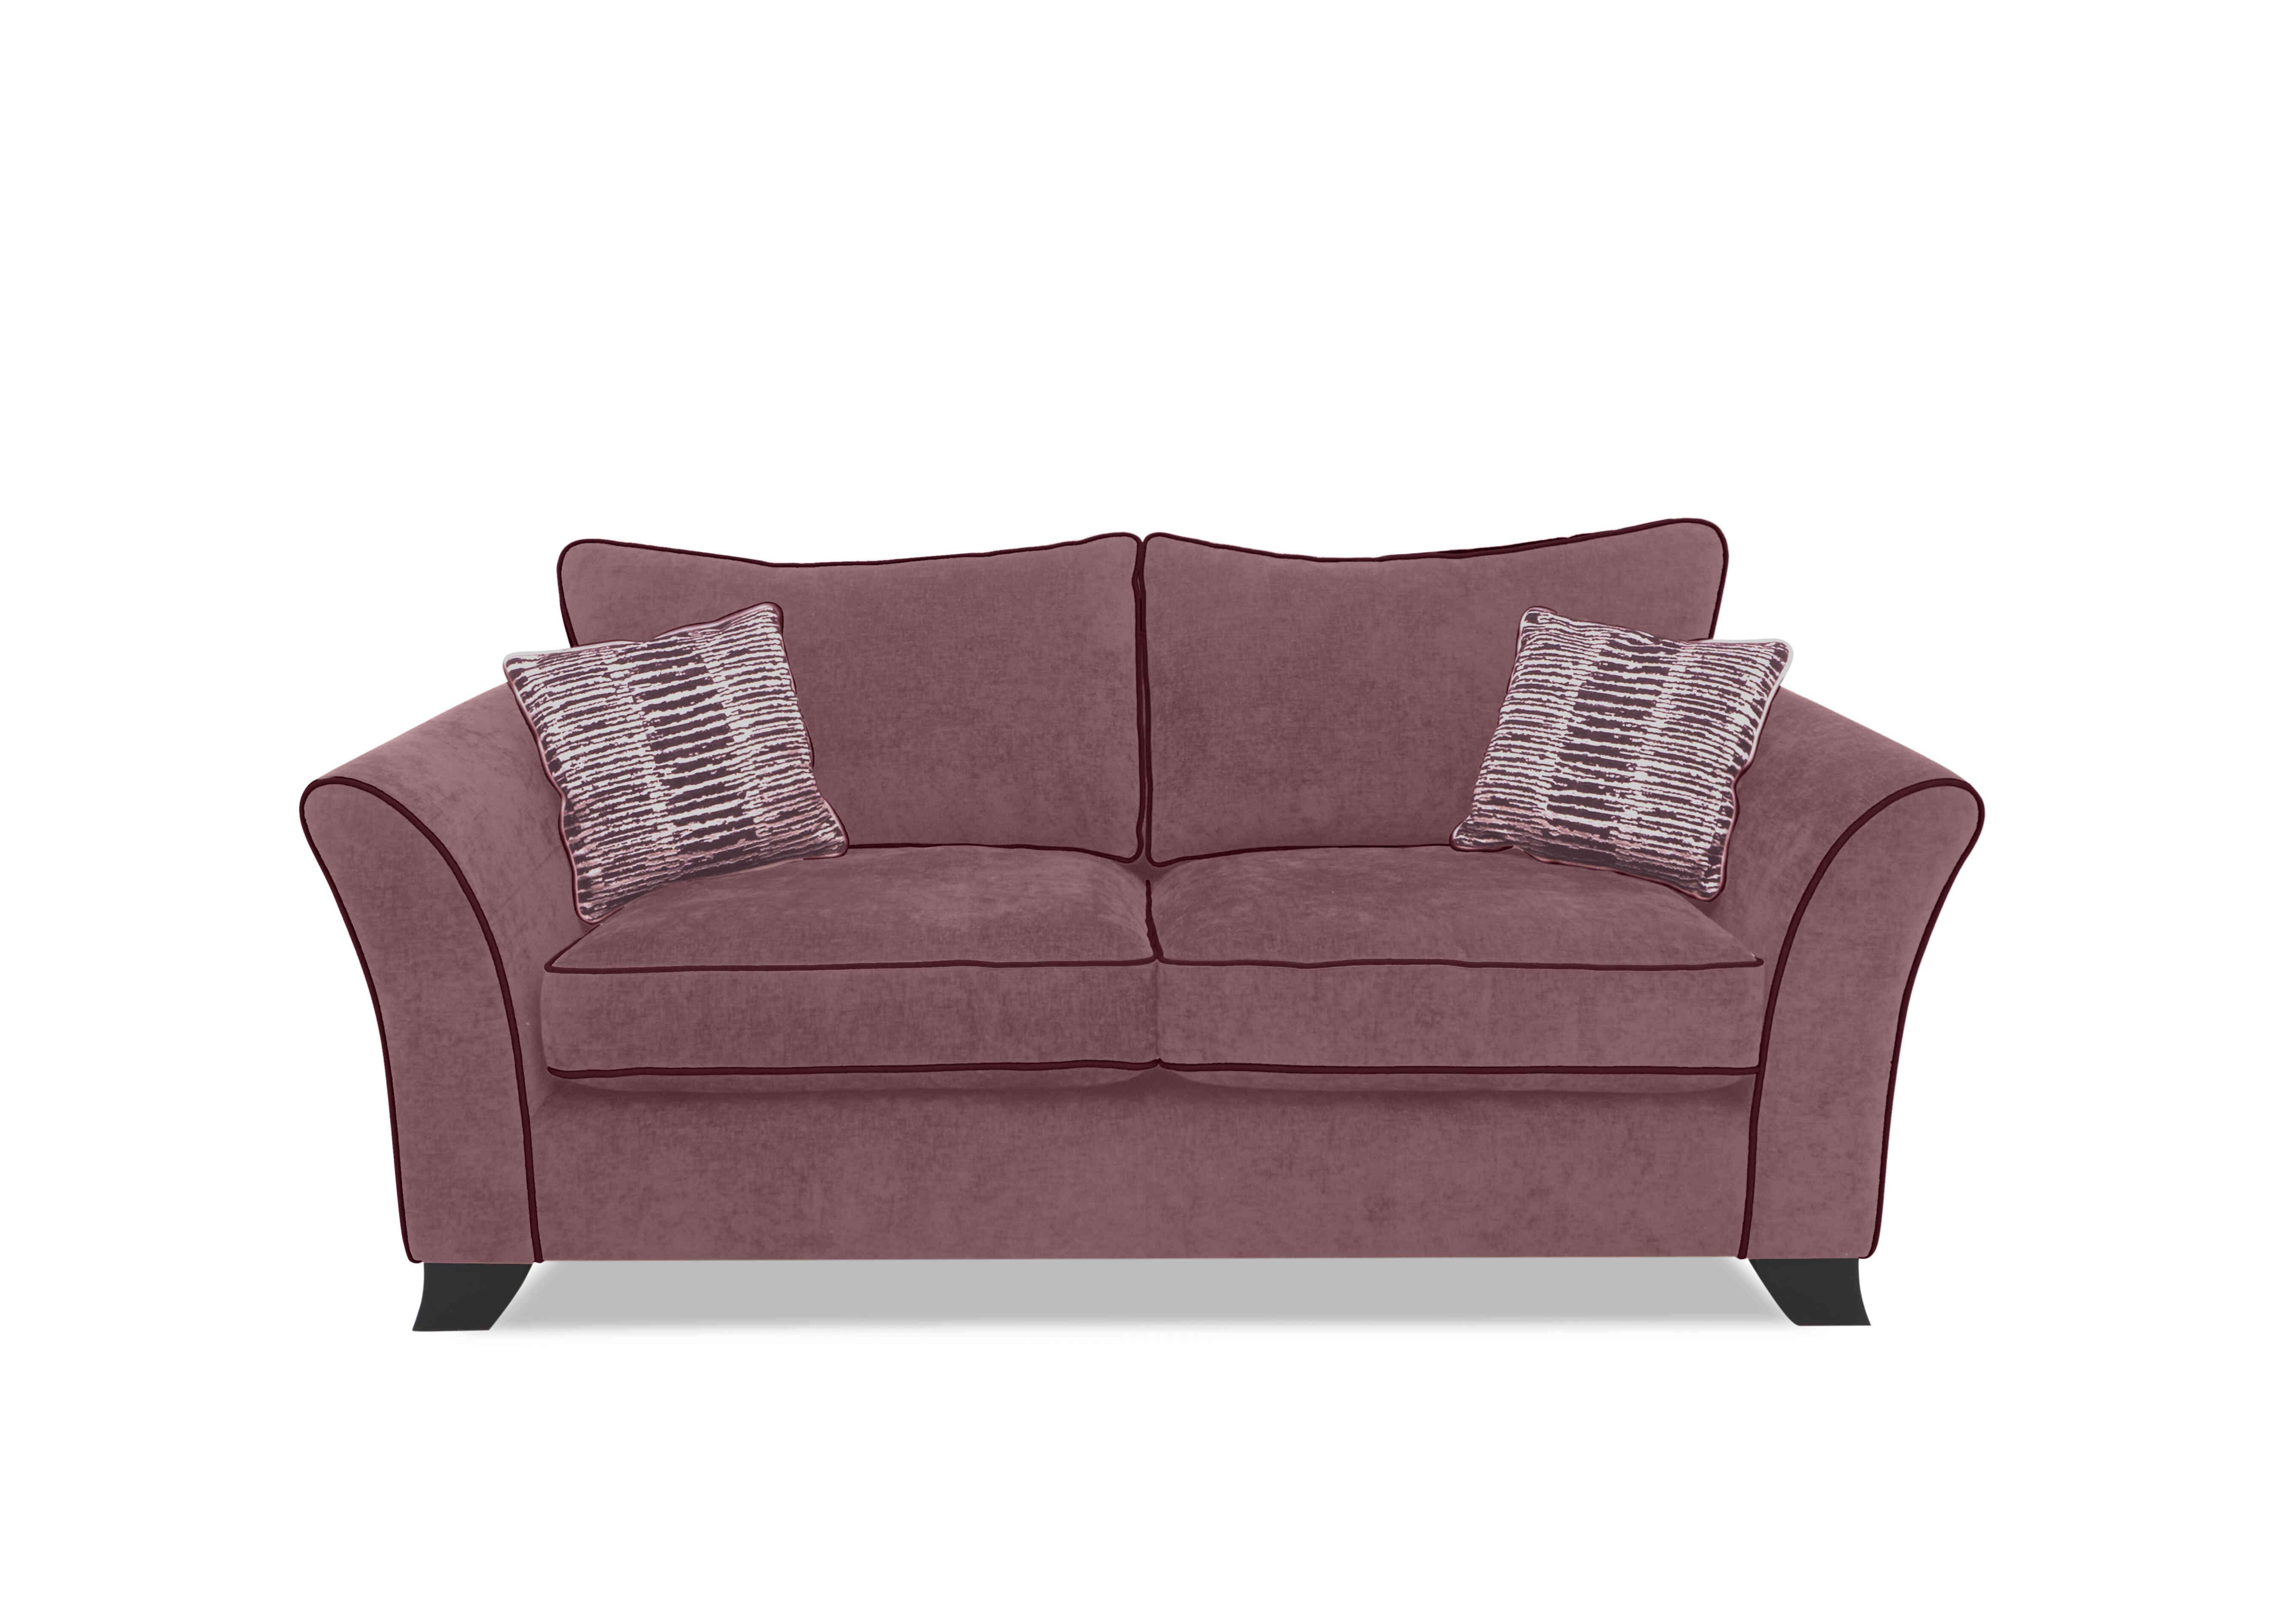 Stellar 3 Seater Classic Back Sofa Bed in Bolero Mulberry Contrast on Furniture Village